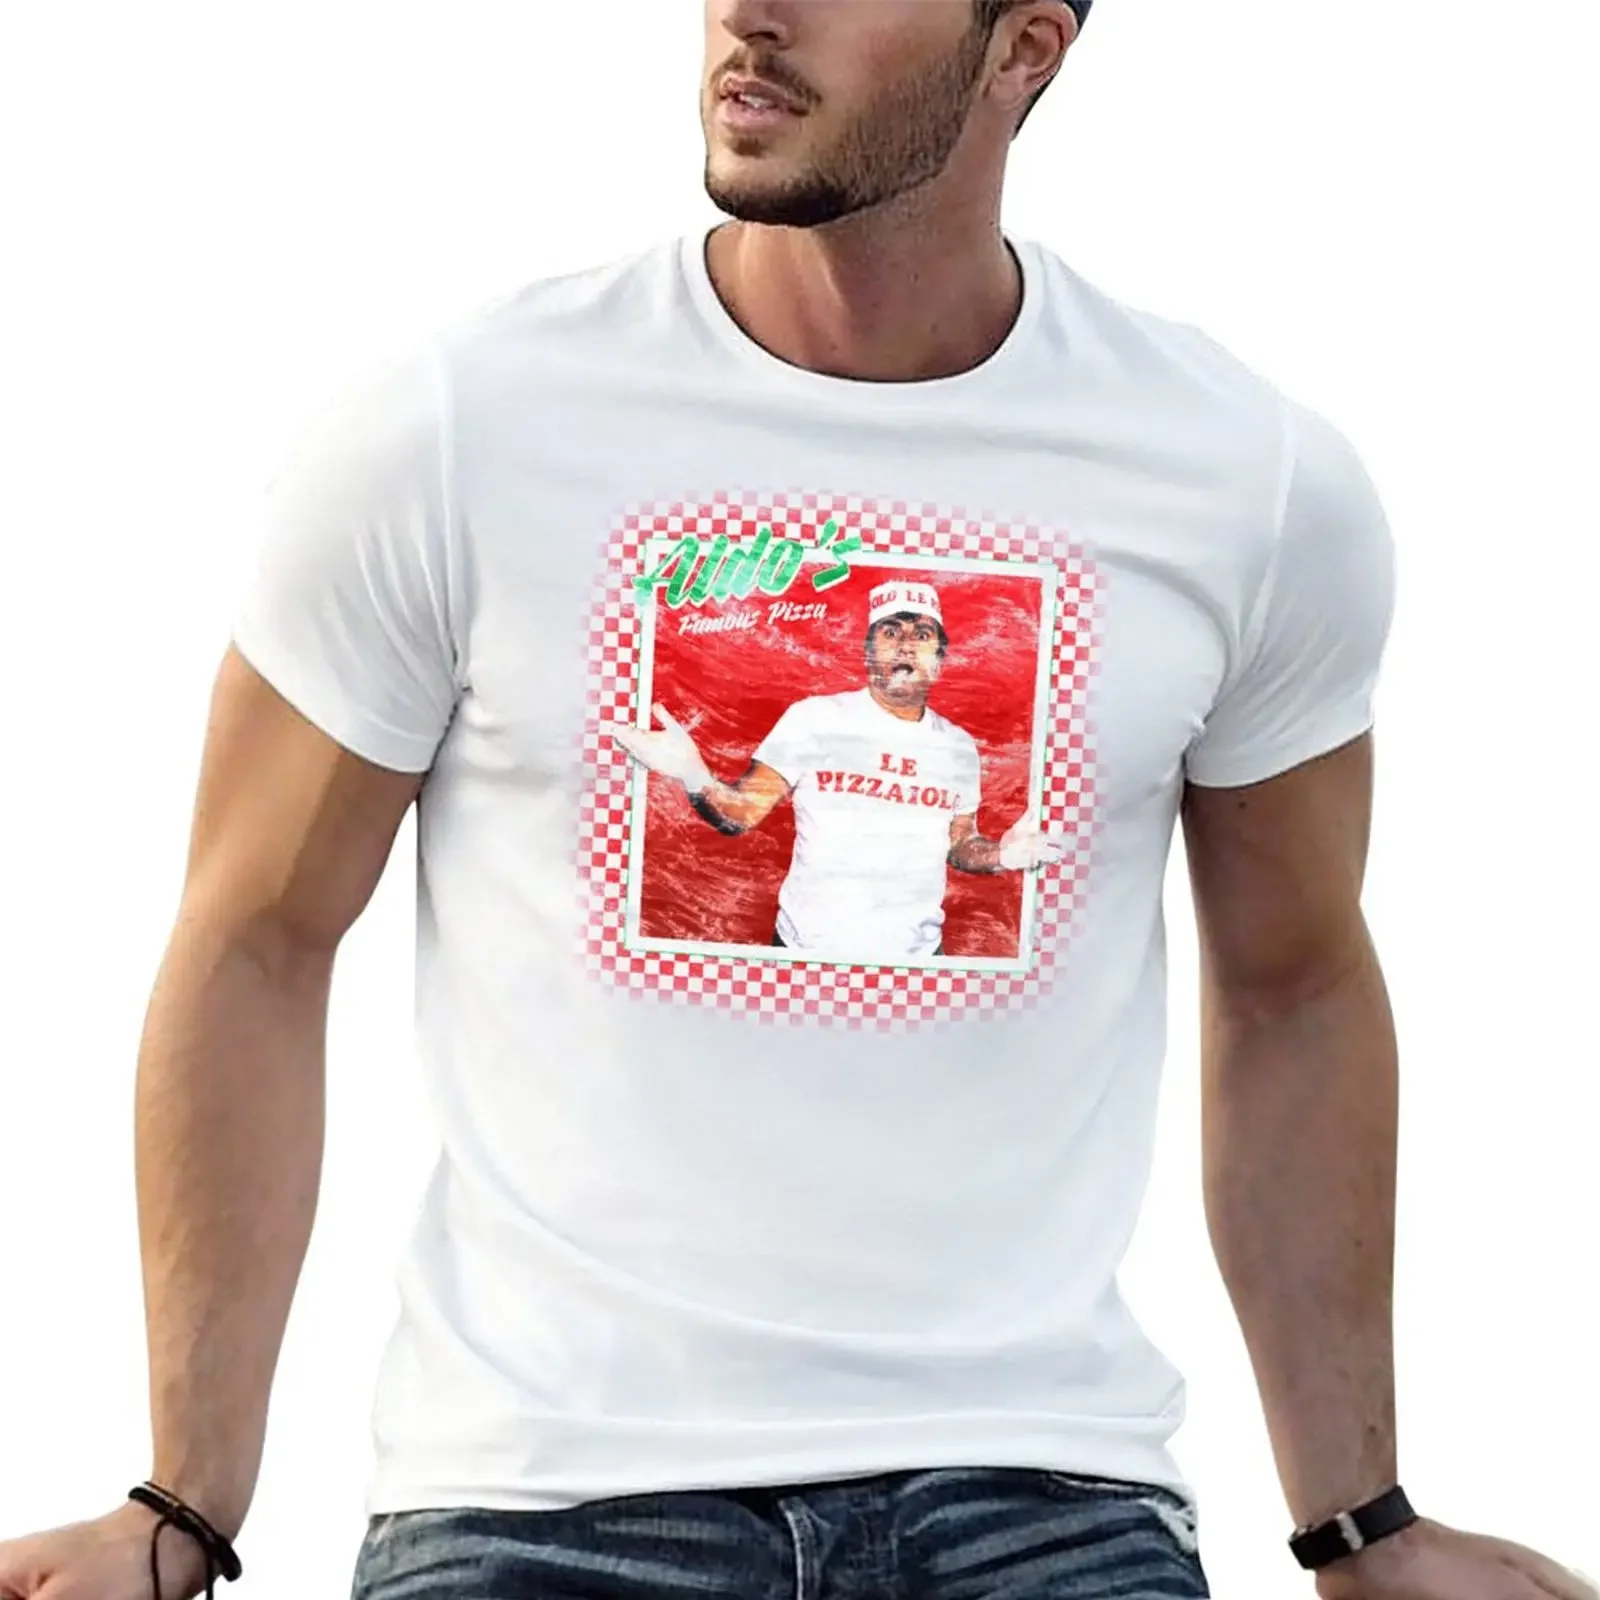 

Aldo's Famous Pizza T-Shirt animal prinfor boys oversizeds mens t shirts